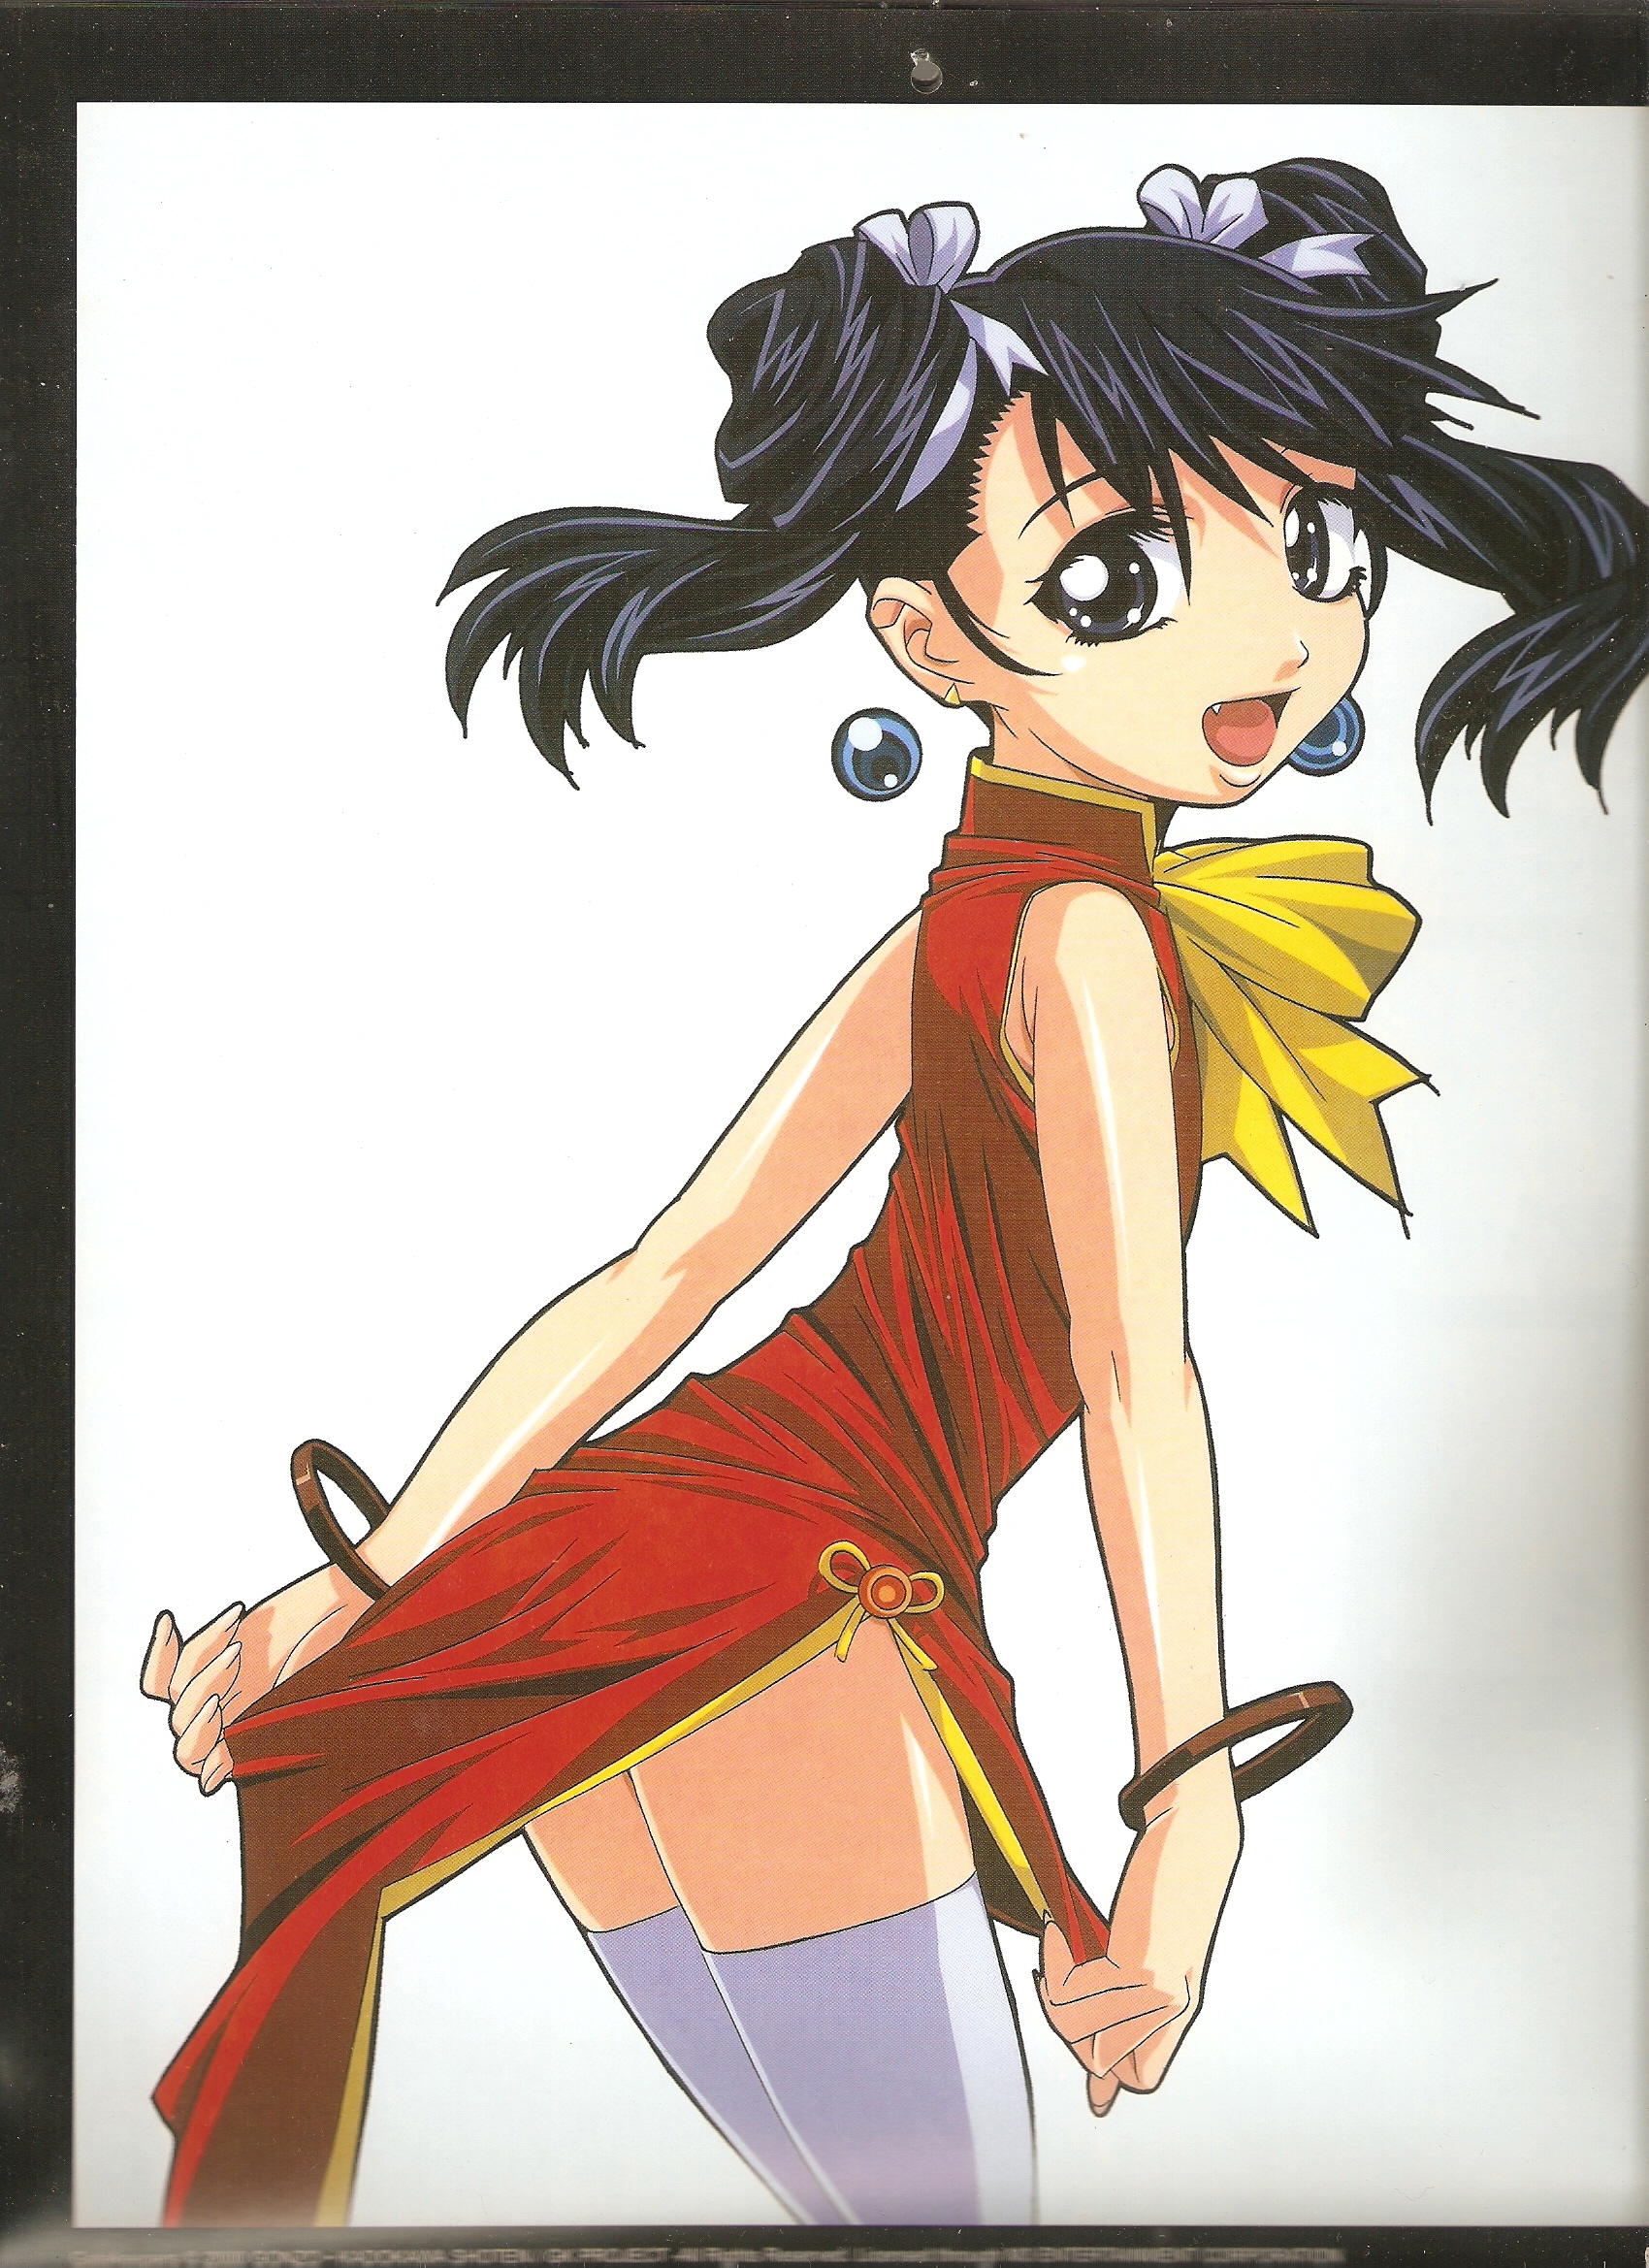 2004 Ladies of Anime Calendar